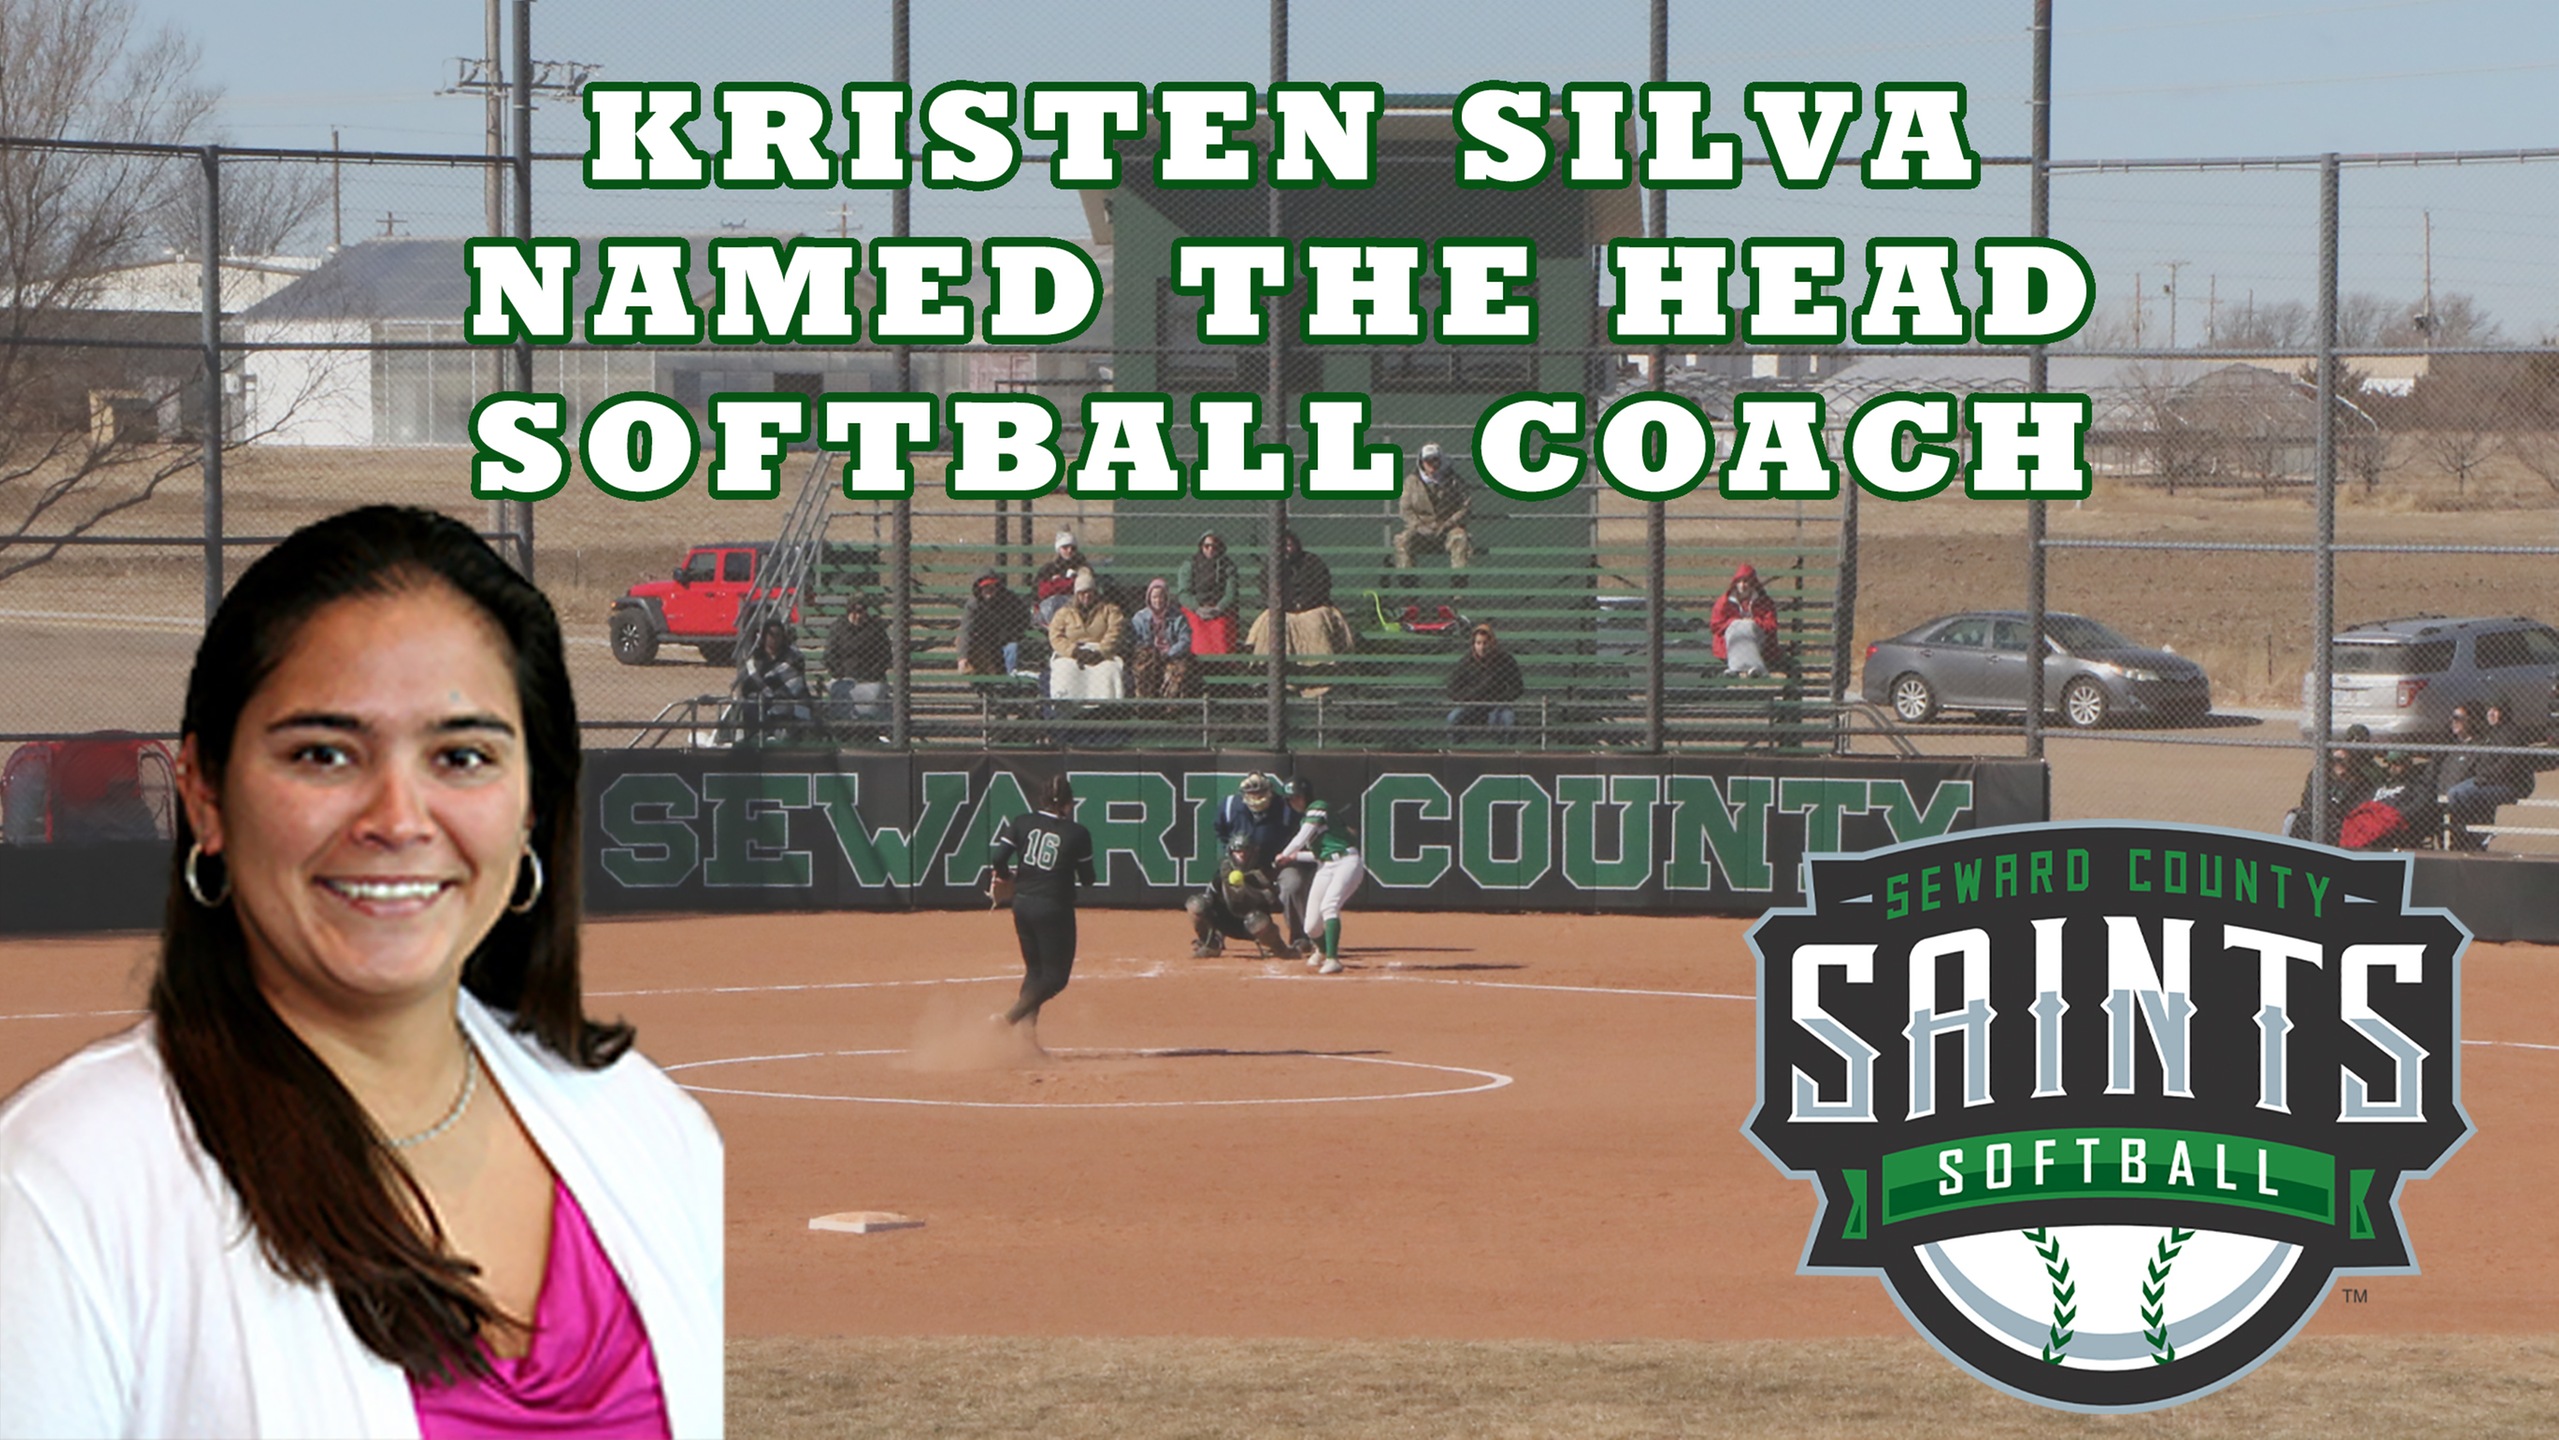 Silva hired to lead the Seward County Softball program